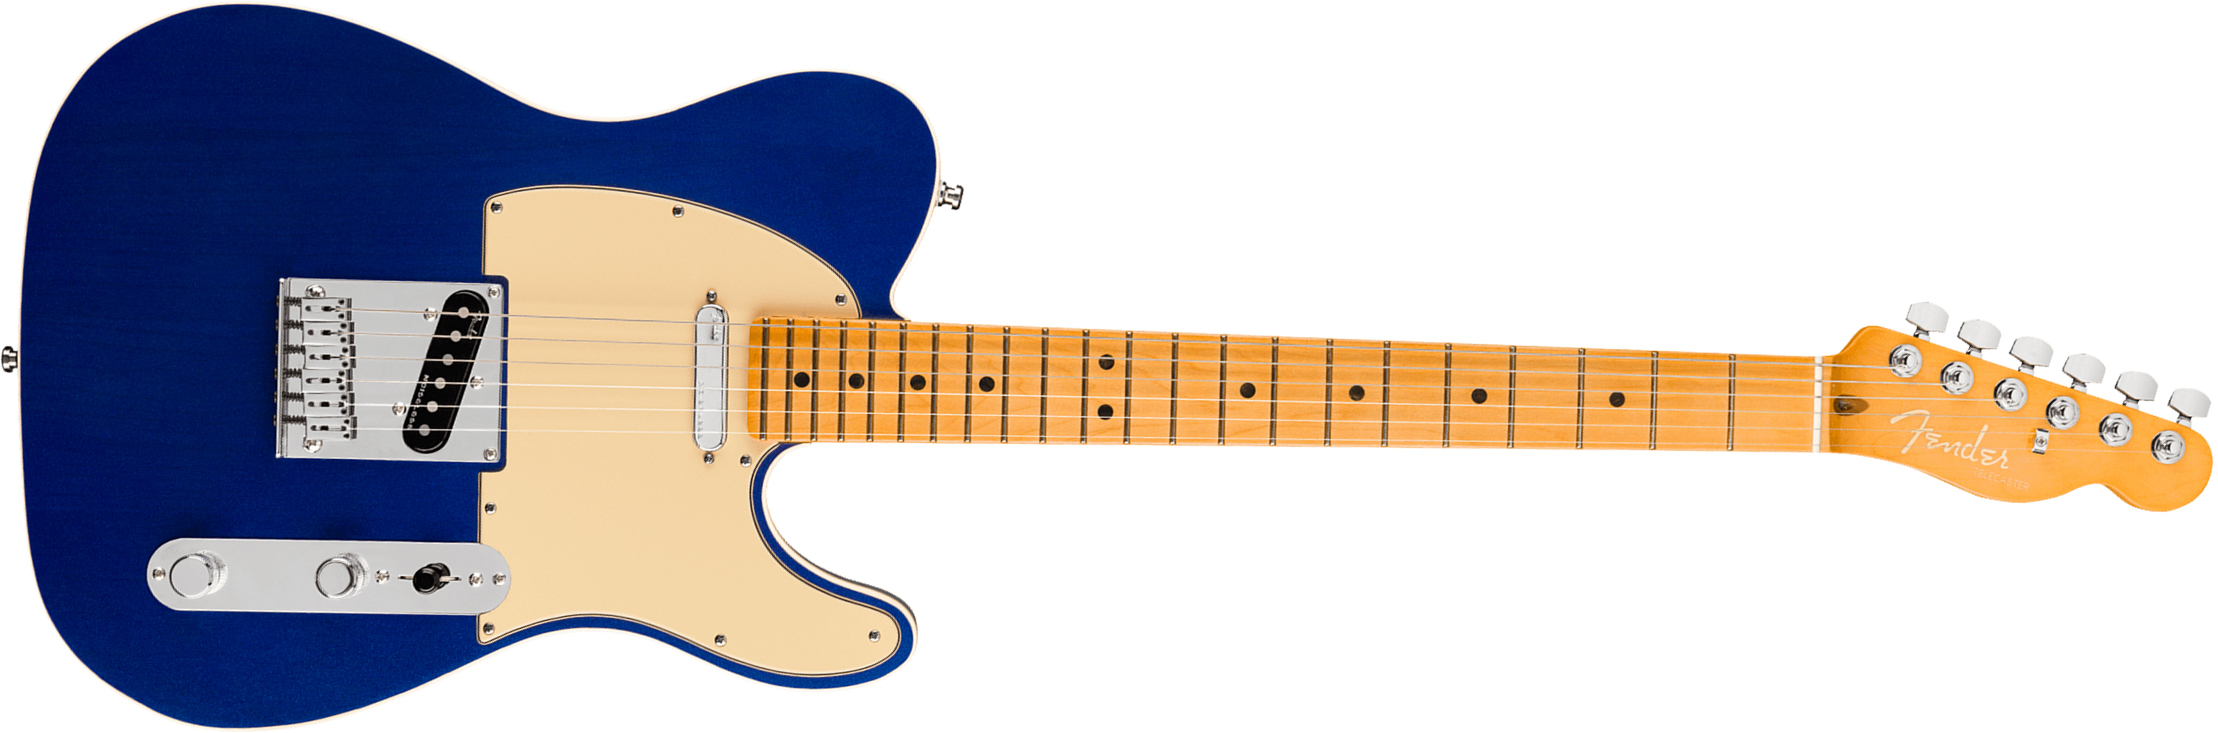 Fender Tele American Ultra 2019 Usa Mn - Cobra Blue - Guitarra eléctrica con forma de tel - Main picture